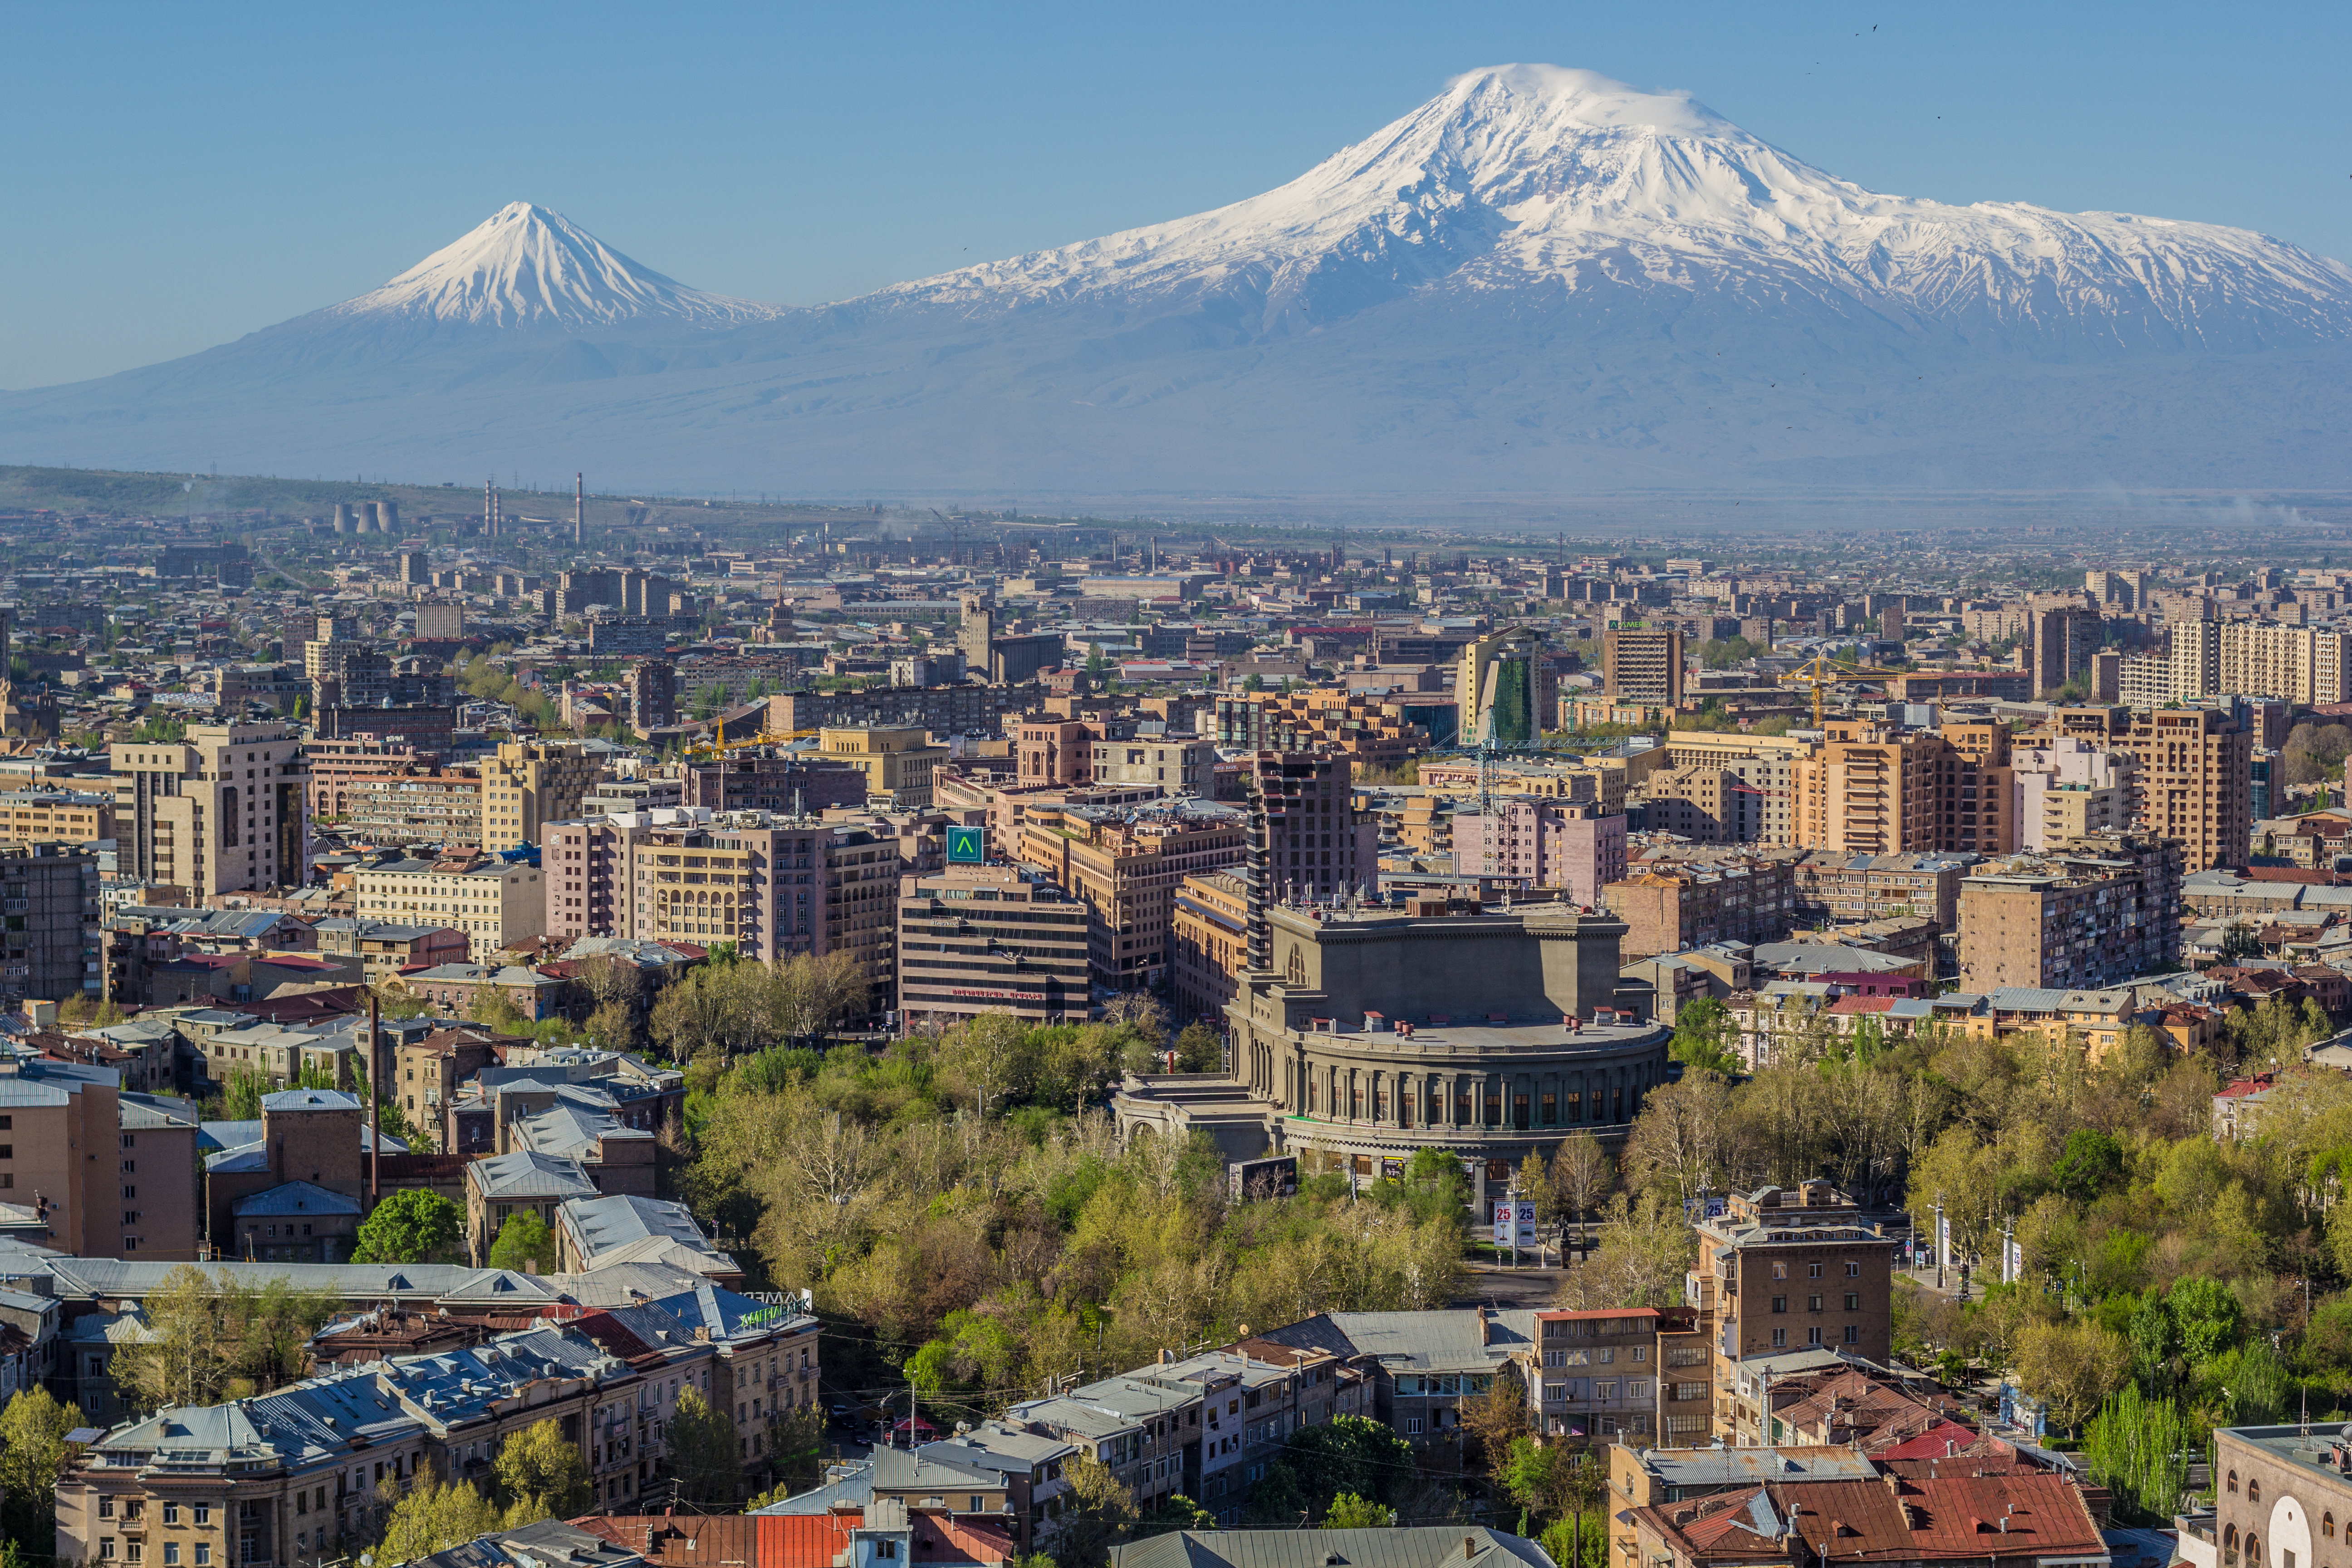 Mount Ararat and the Yerevan skyline, photo by Սէրուժ Ուրիշեան (Serouj Ourishian), Creative Commons Attribution-Share Alike 3.0 Unported license.